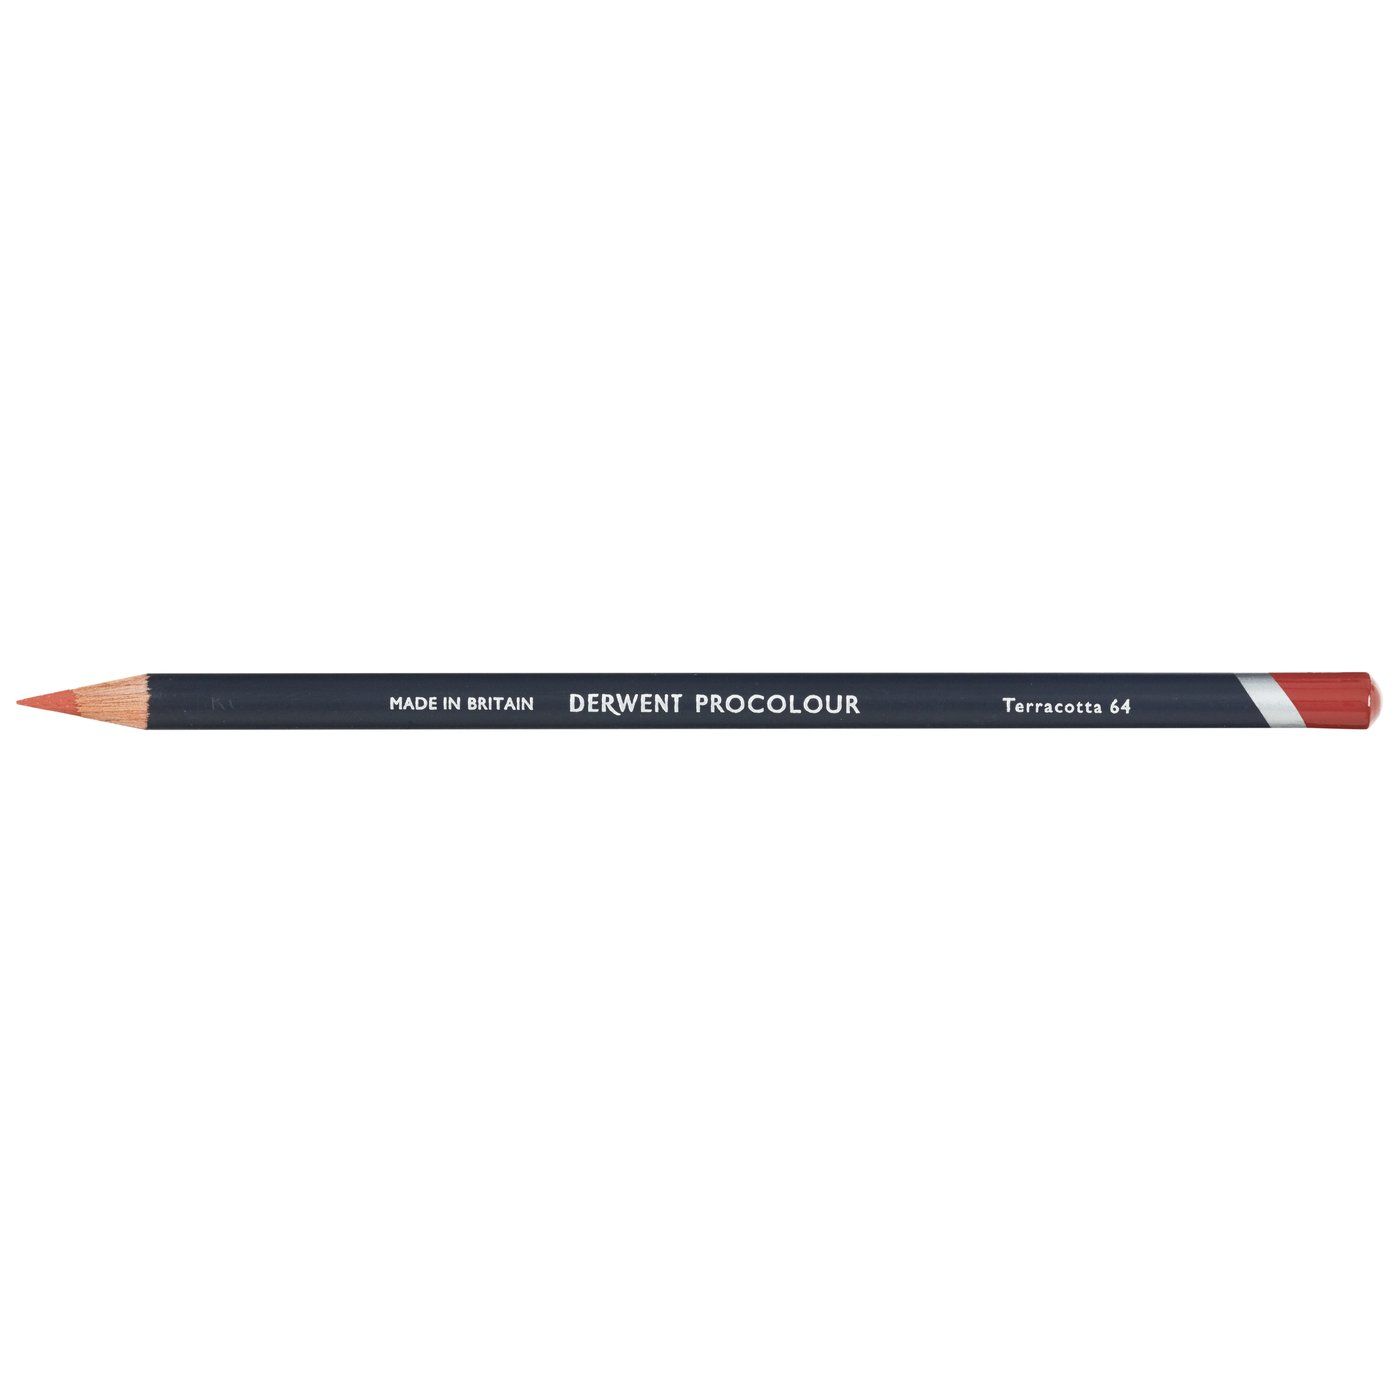 Derwent Procolour Pencil - 64 Terra Cotta